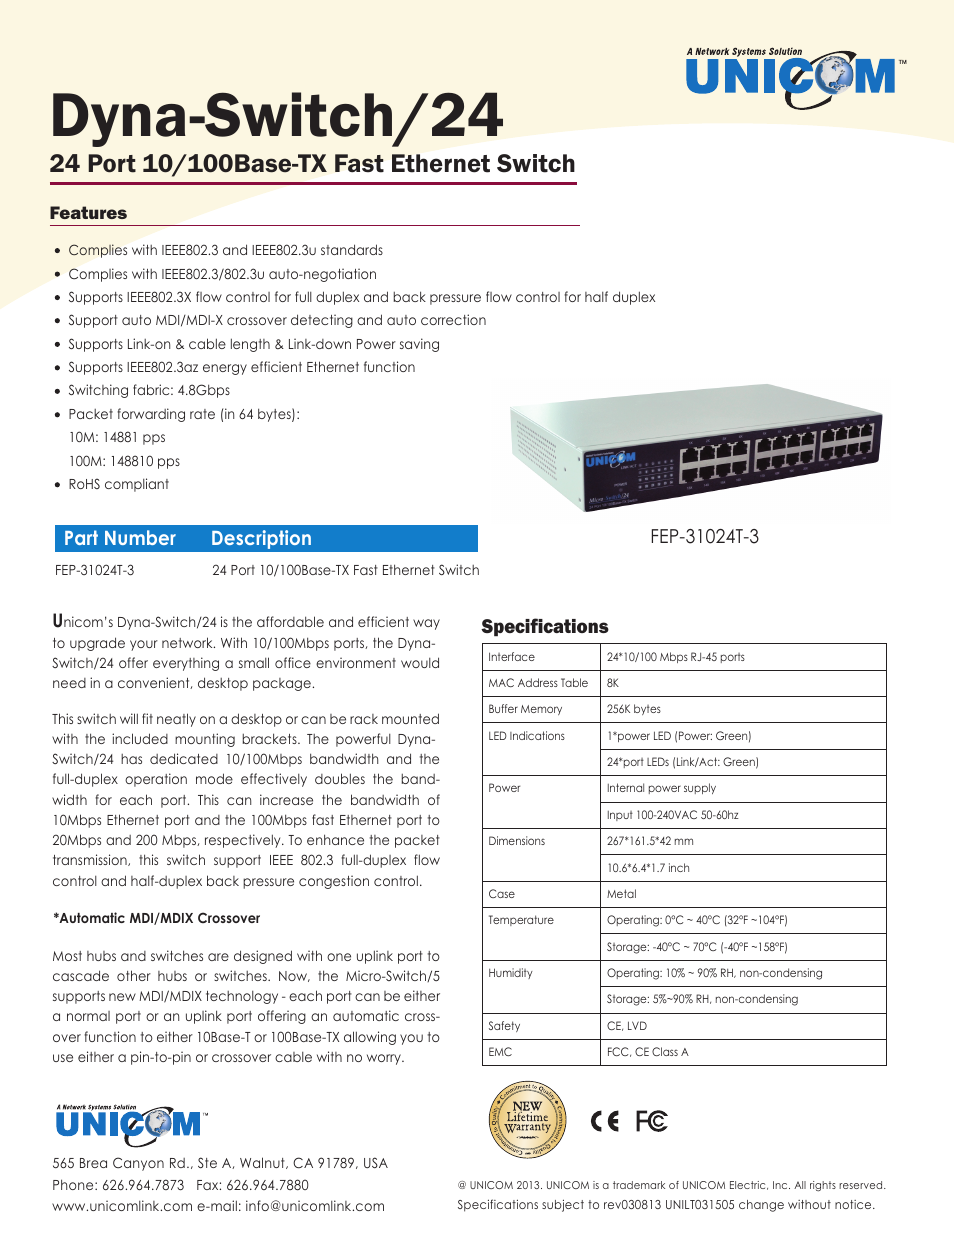 UNICOM Electric 24 User Manual | 1 page